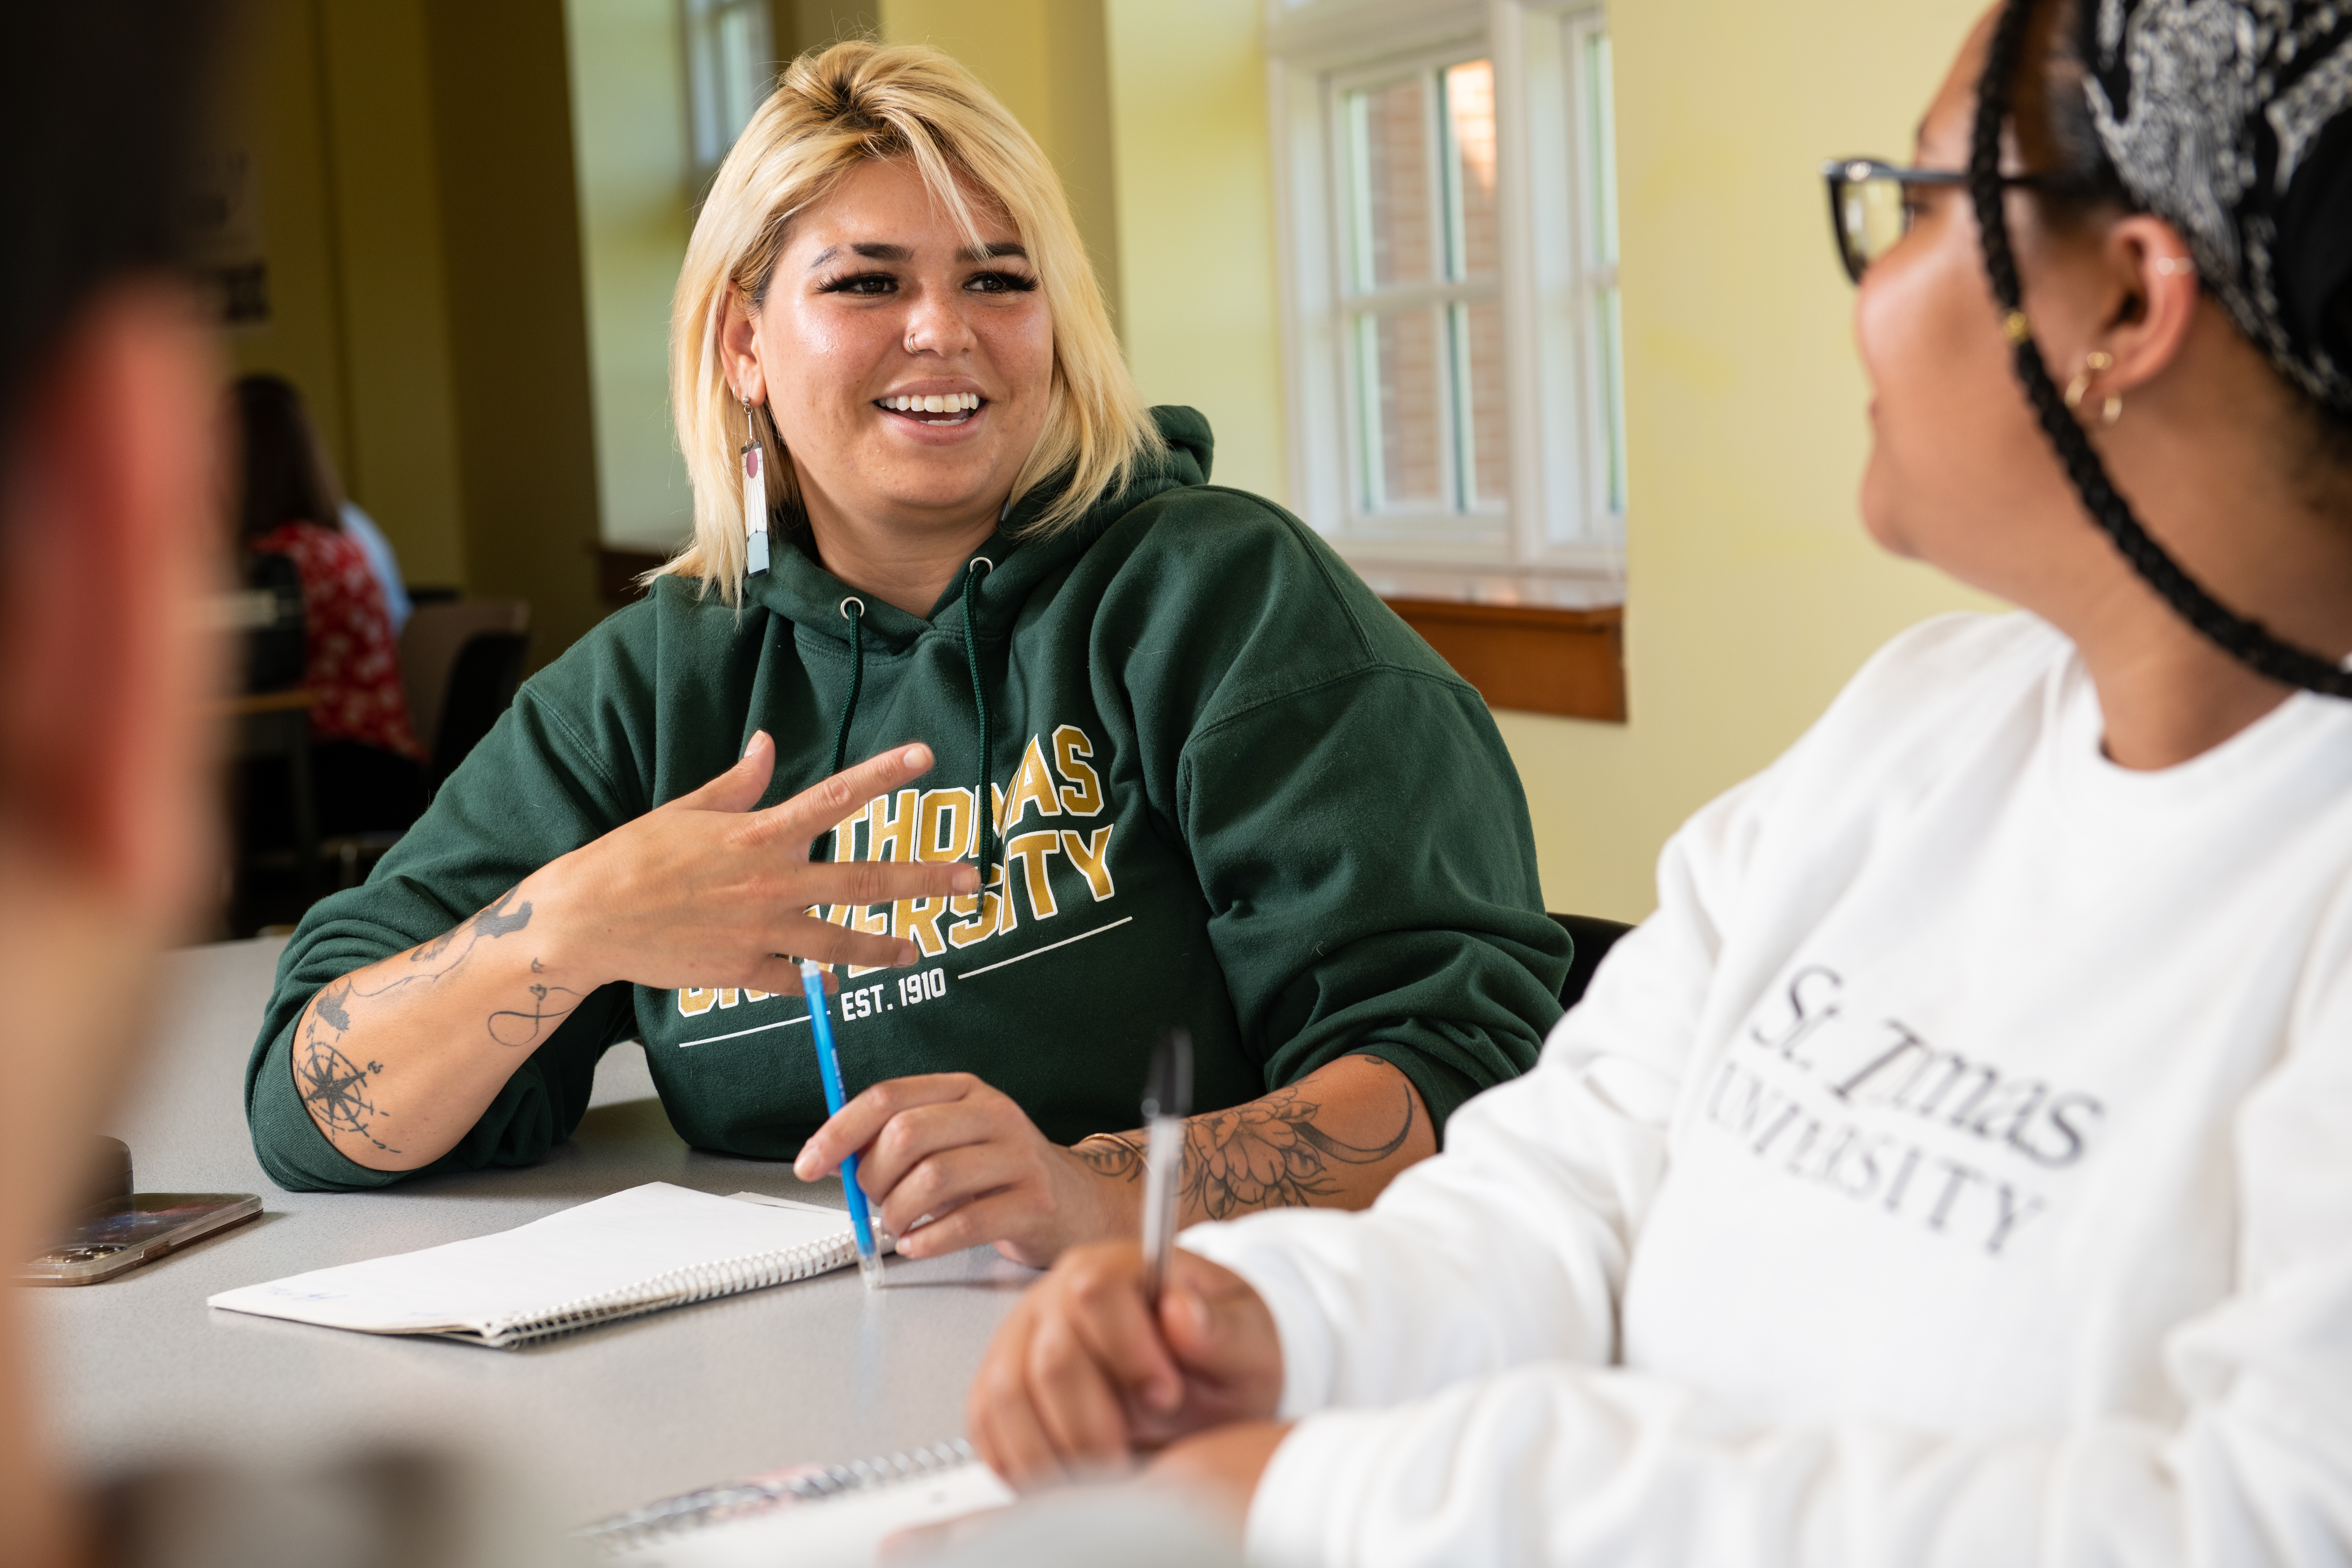 Two students wearing STU hoodies talking in a classroom